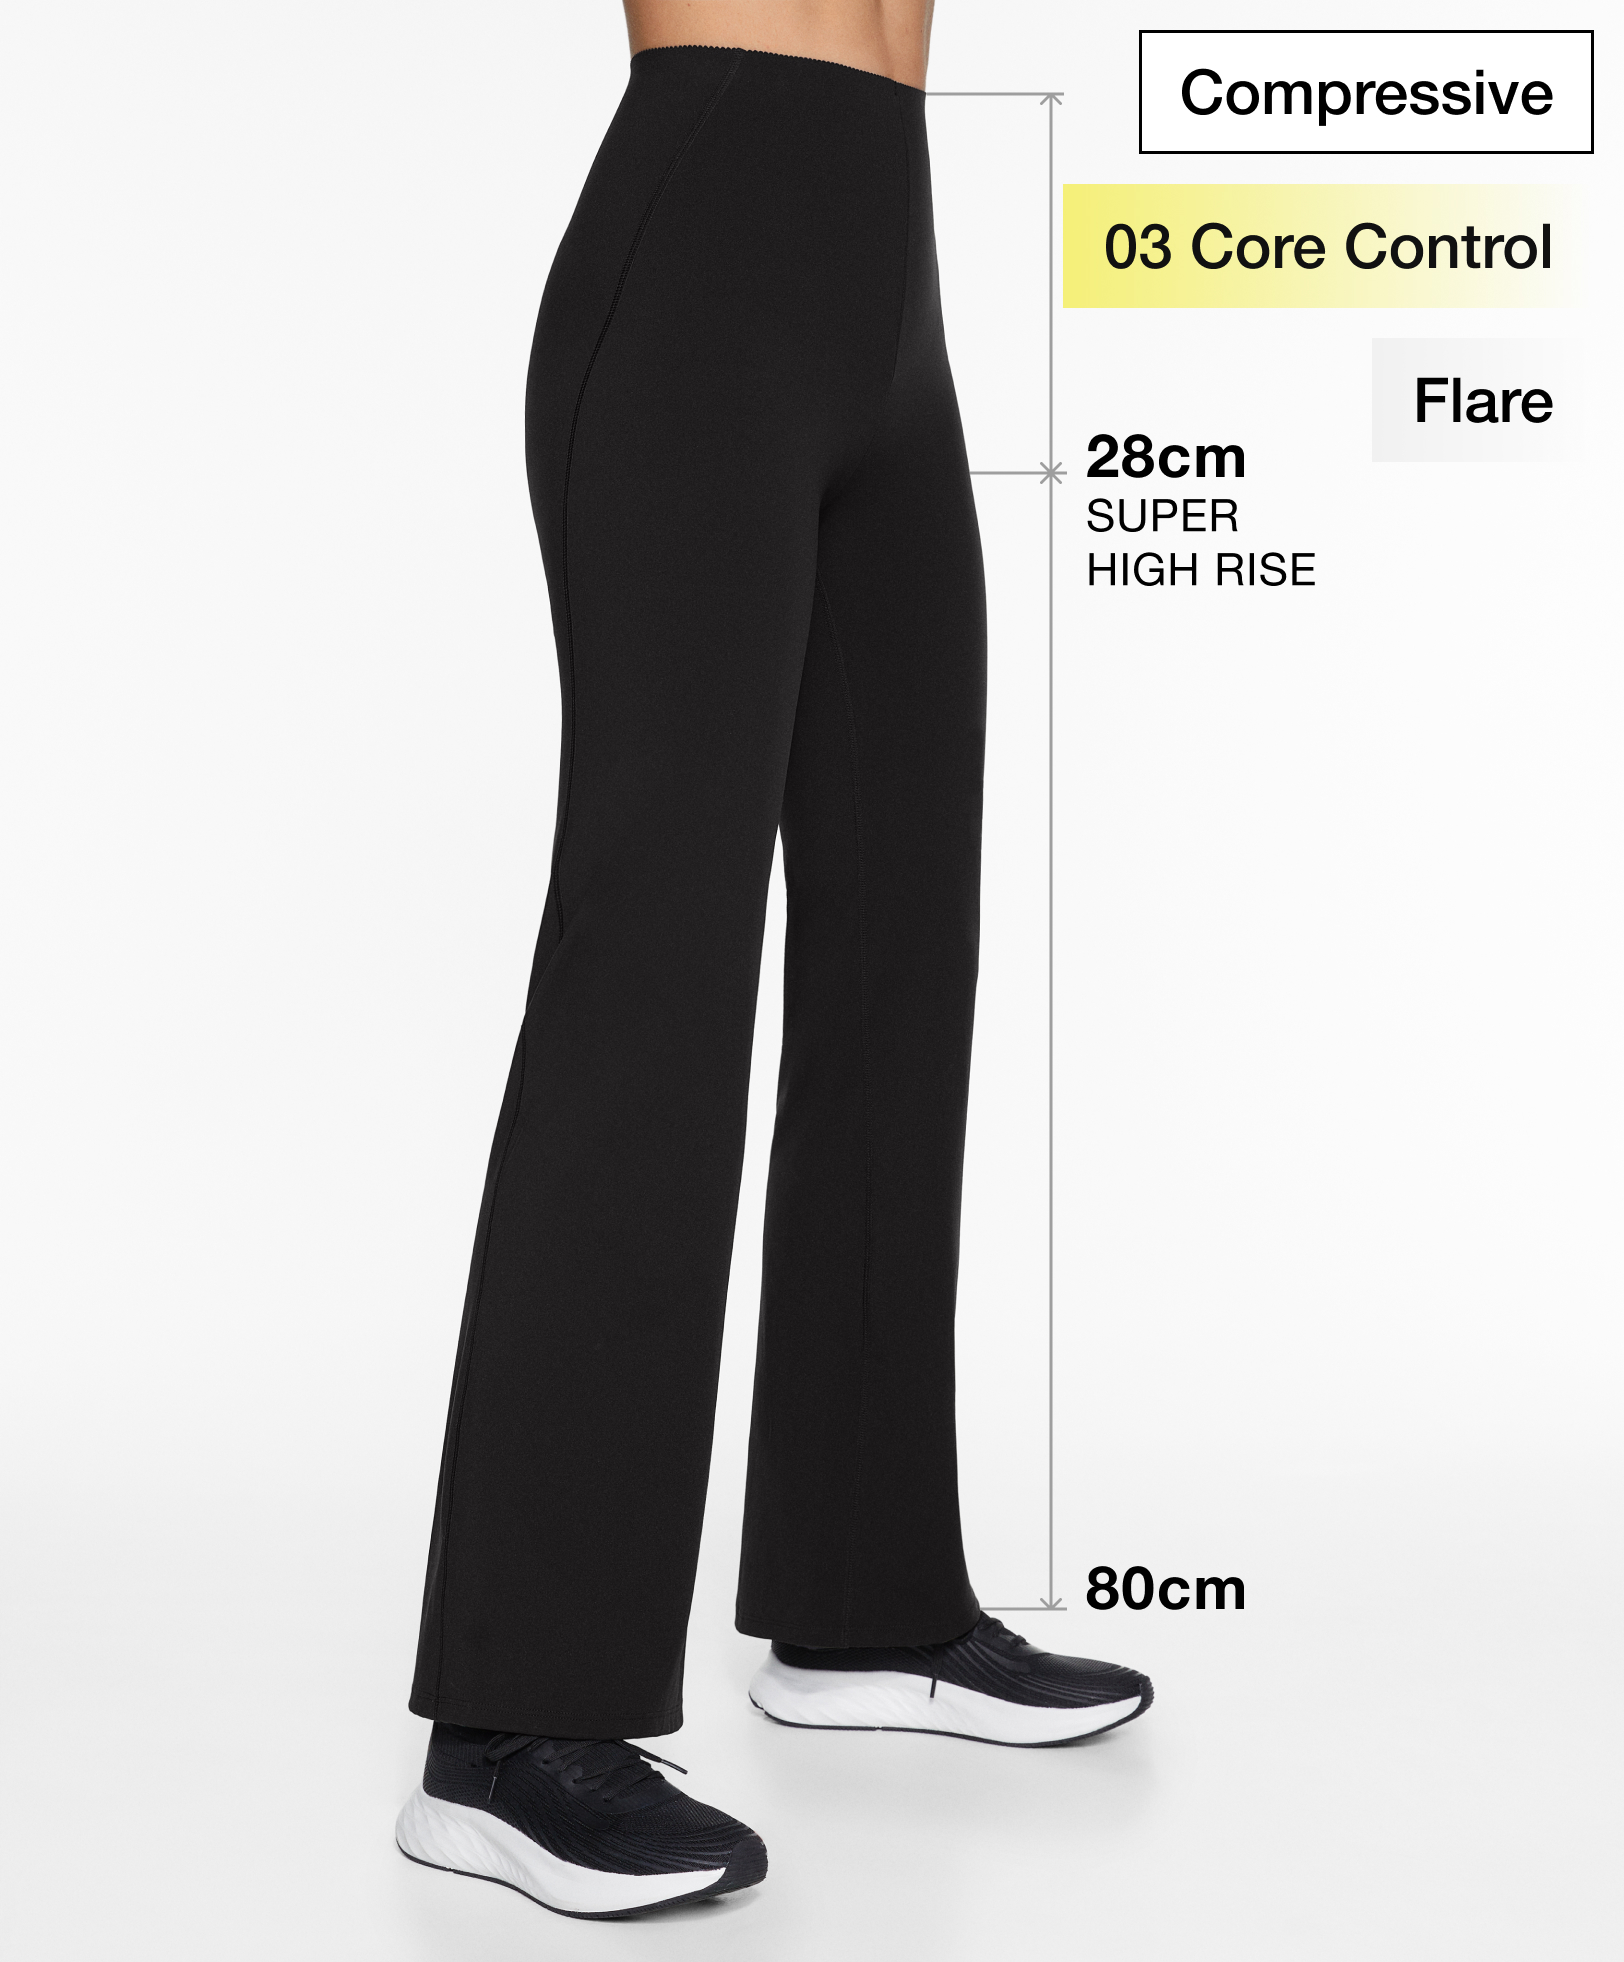 Core Control Compressive super-high-rise flare trousers